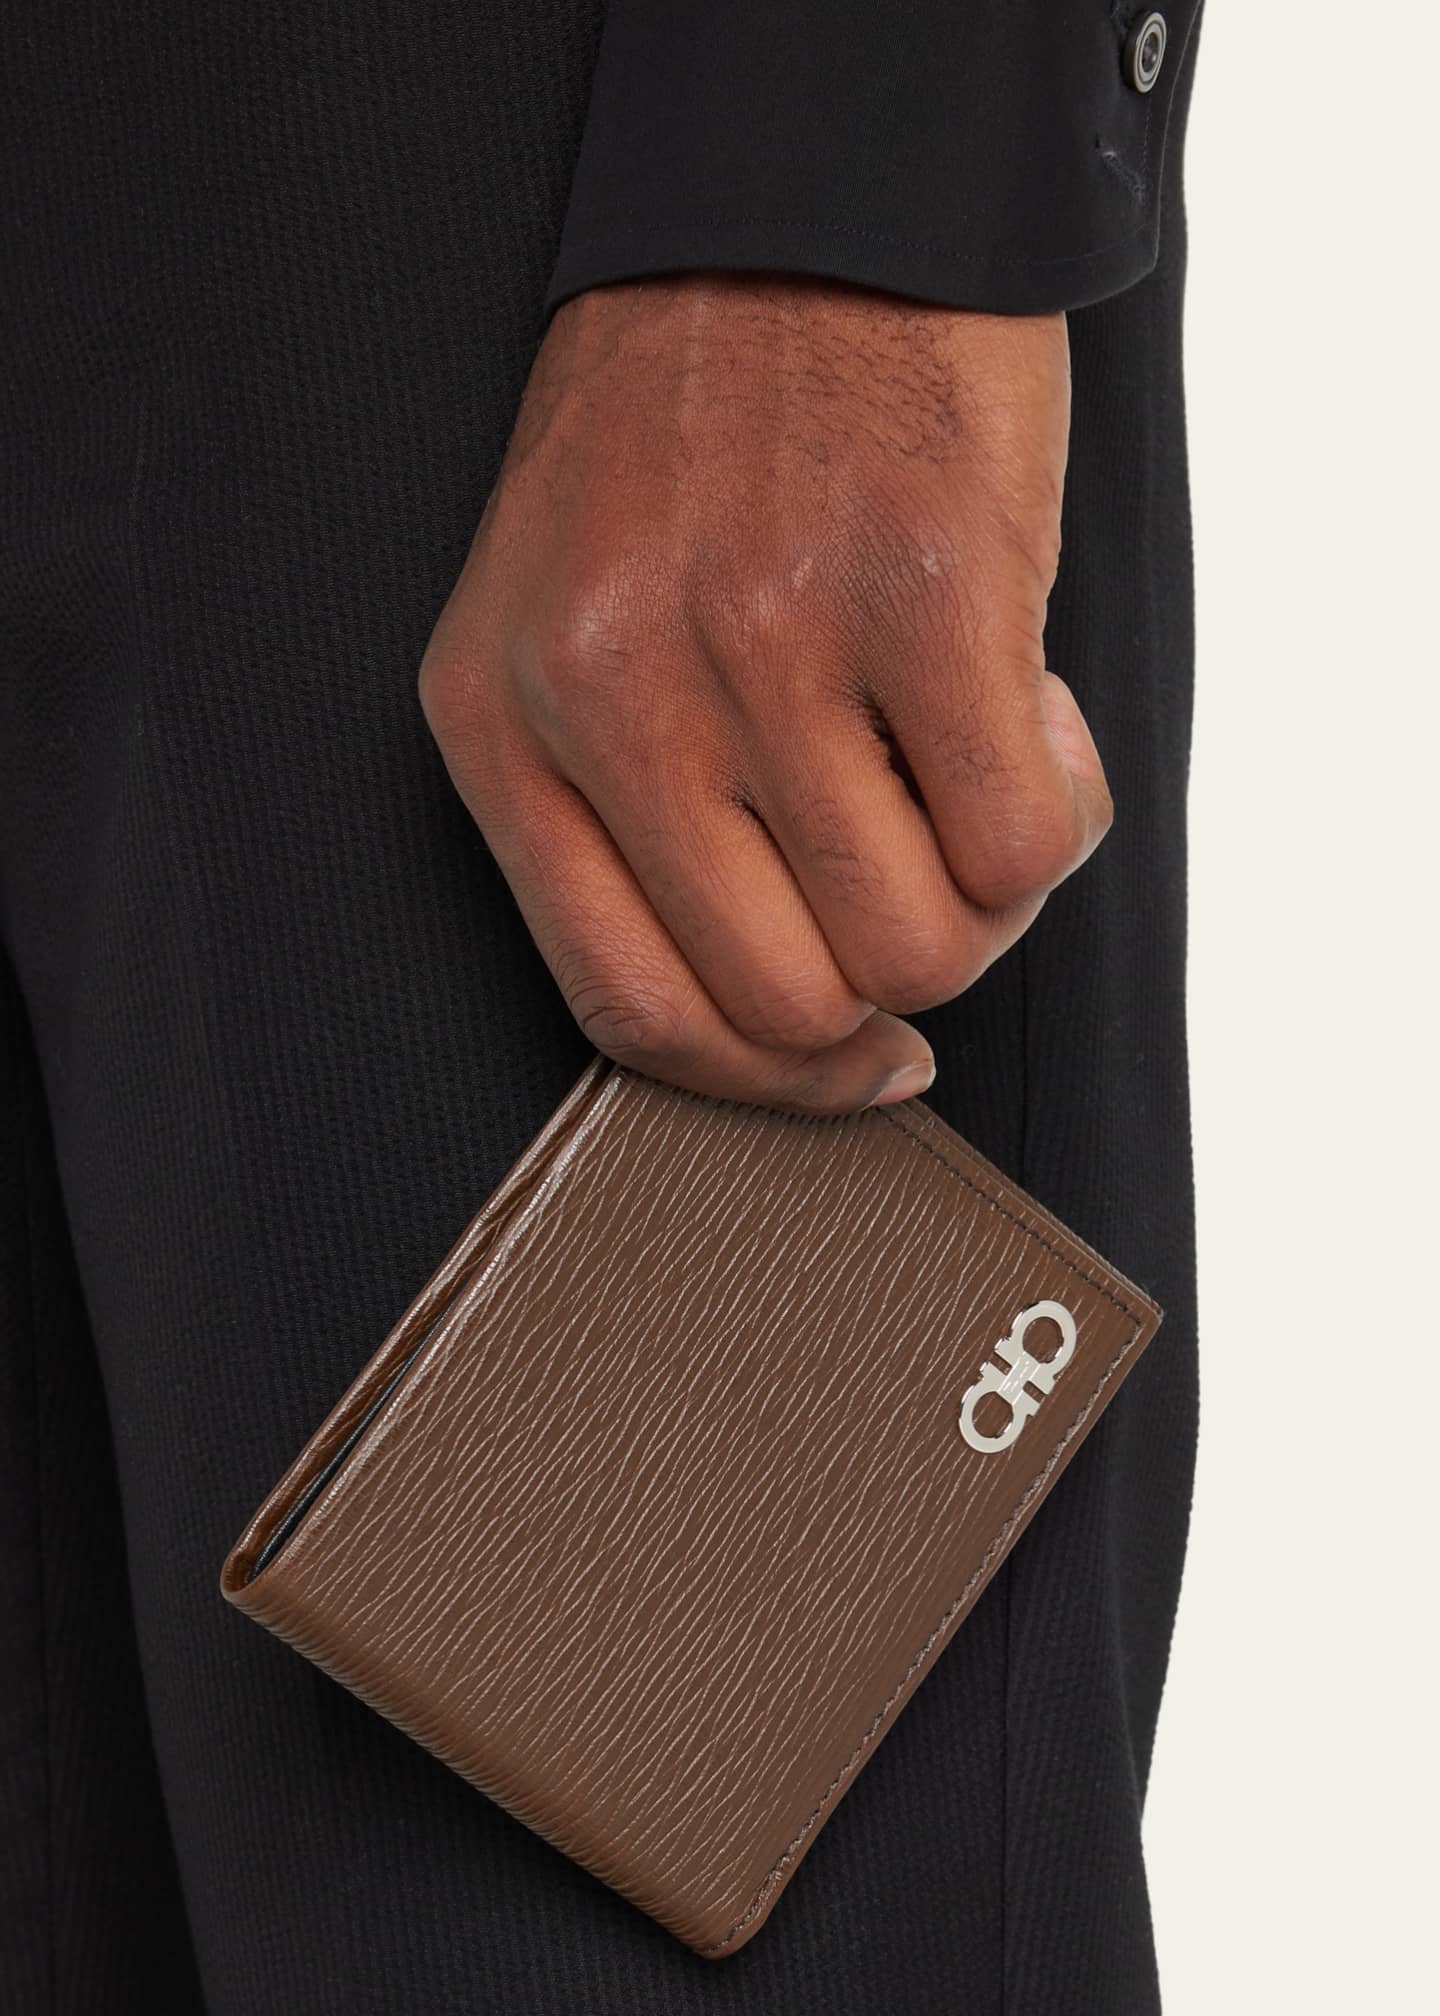 Ferragamo Men's Gancini Leather Bifold Wallet